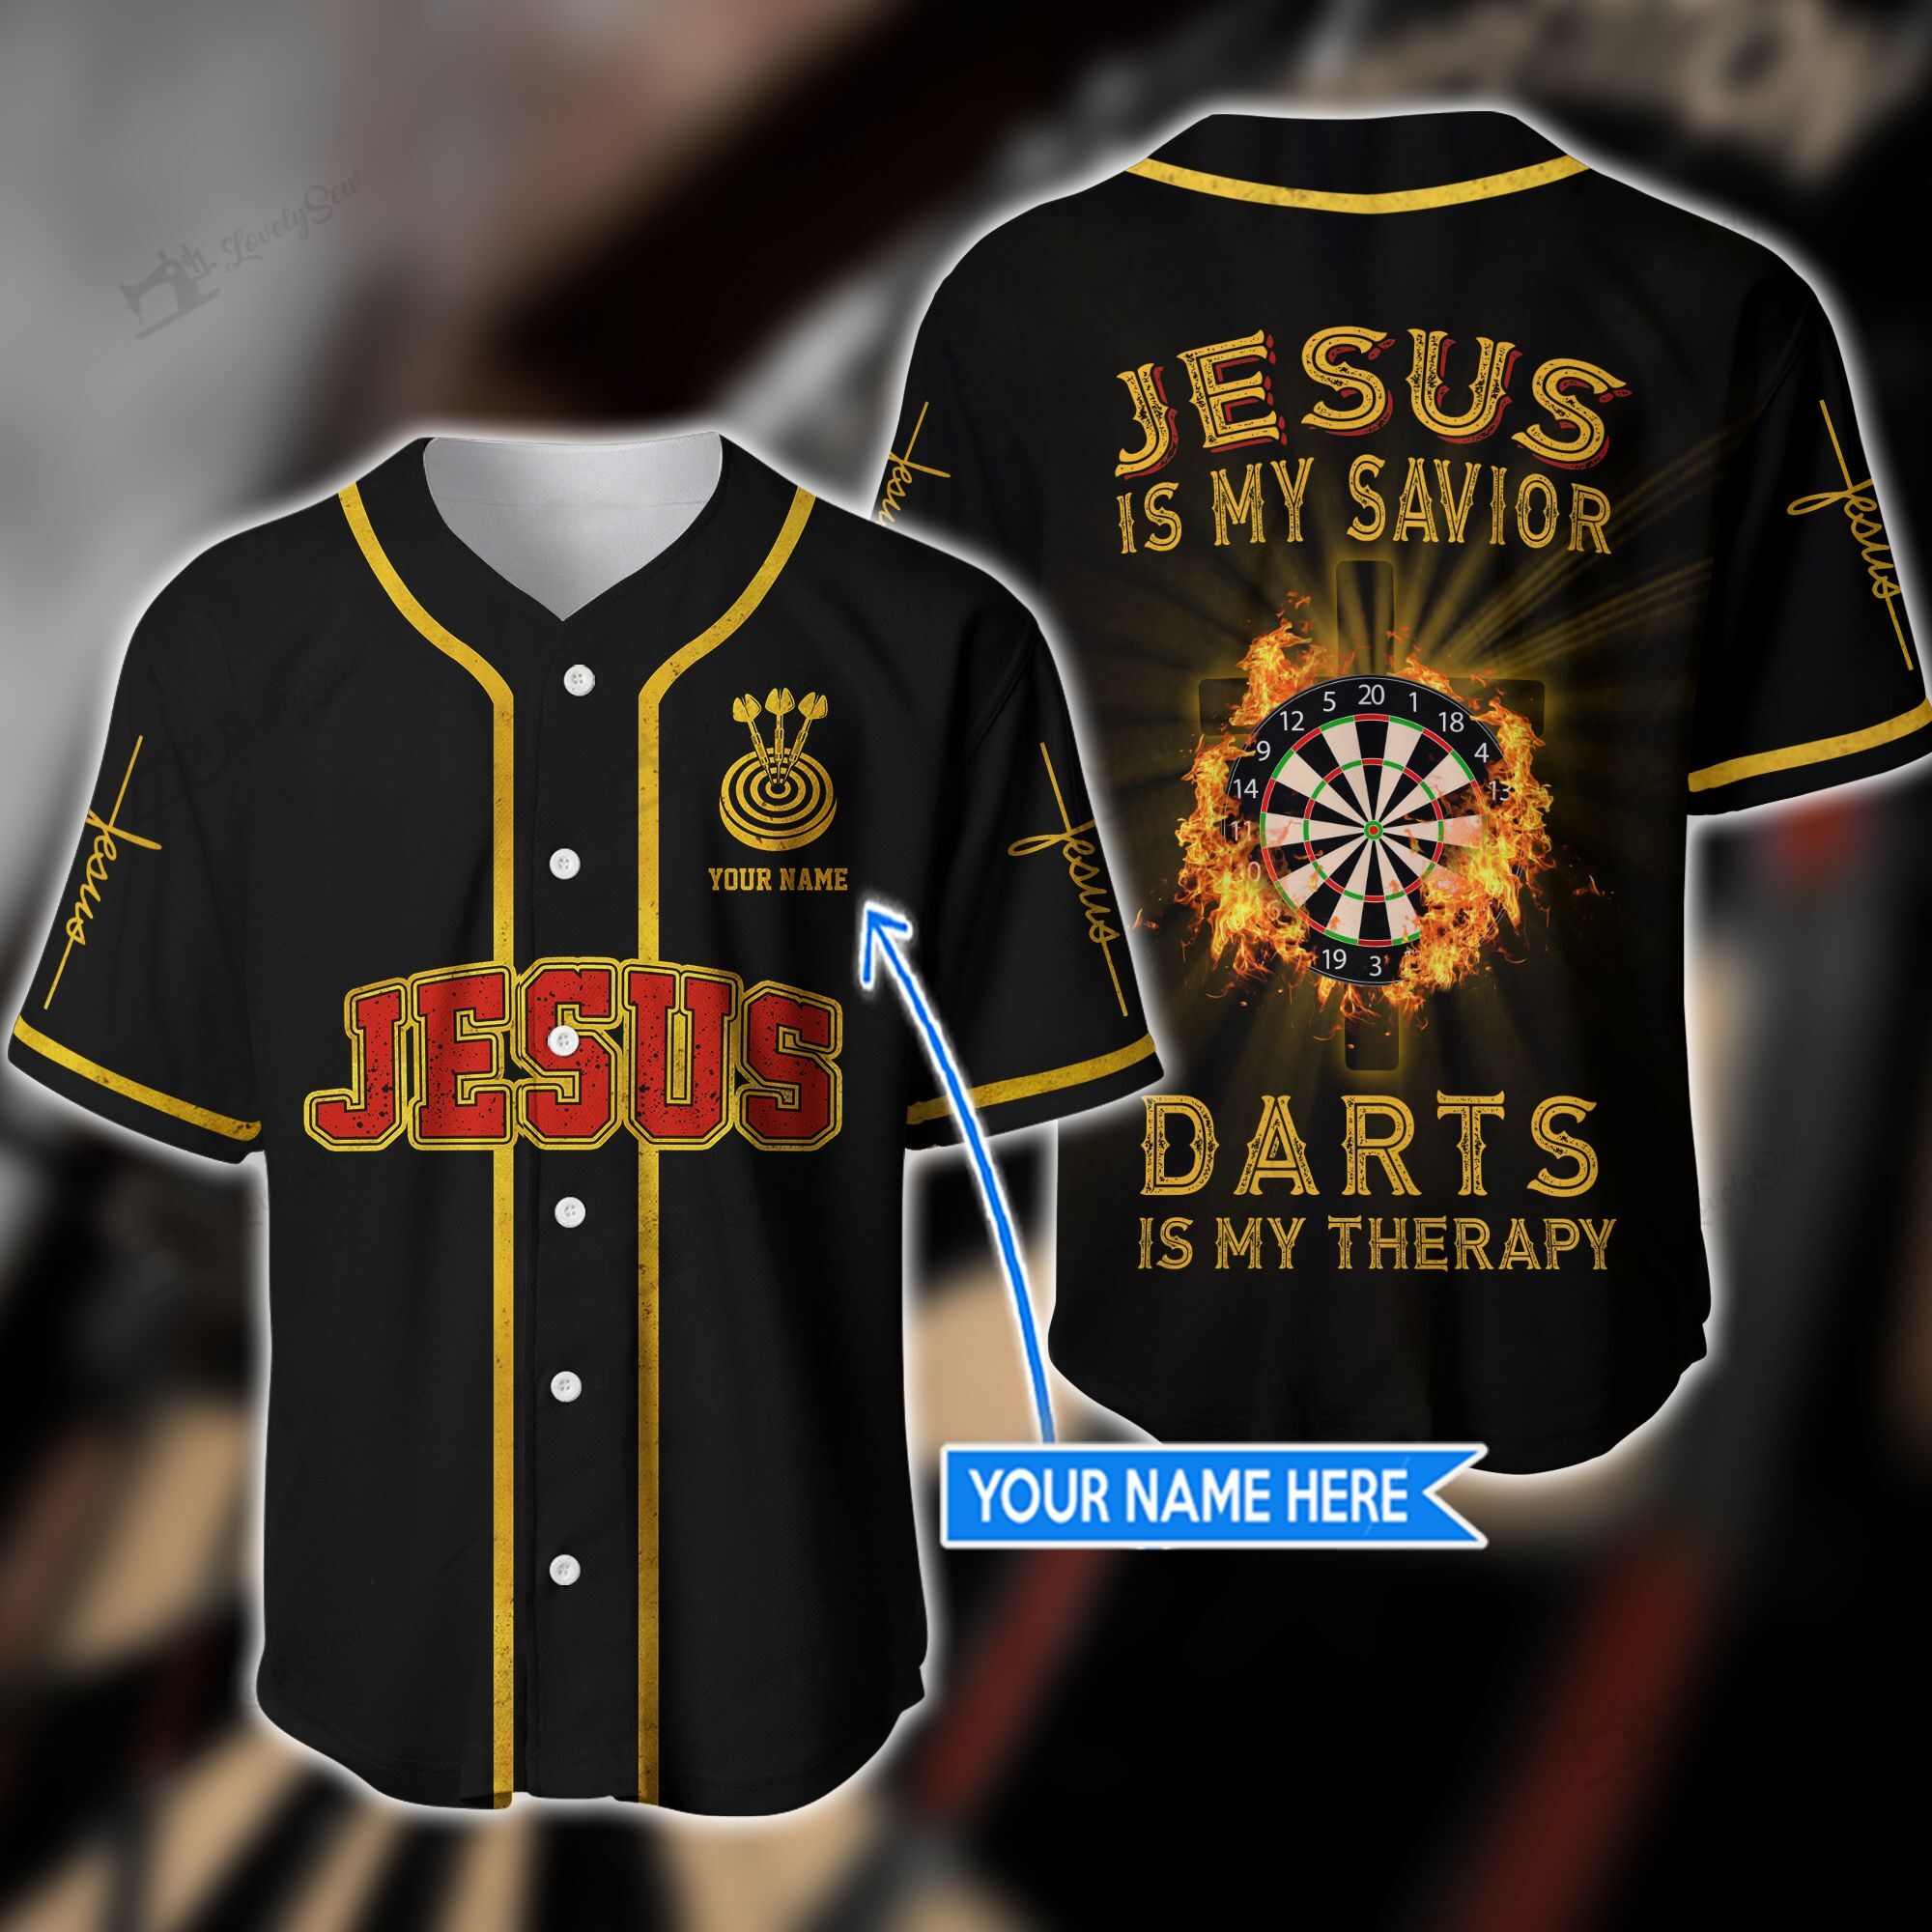 Jesus is my savior darts is my therapy custom name baseball shirt